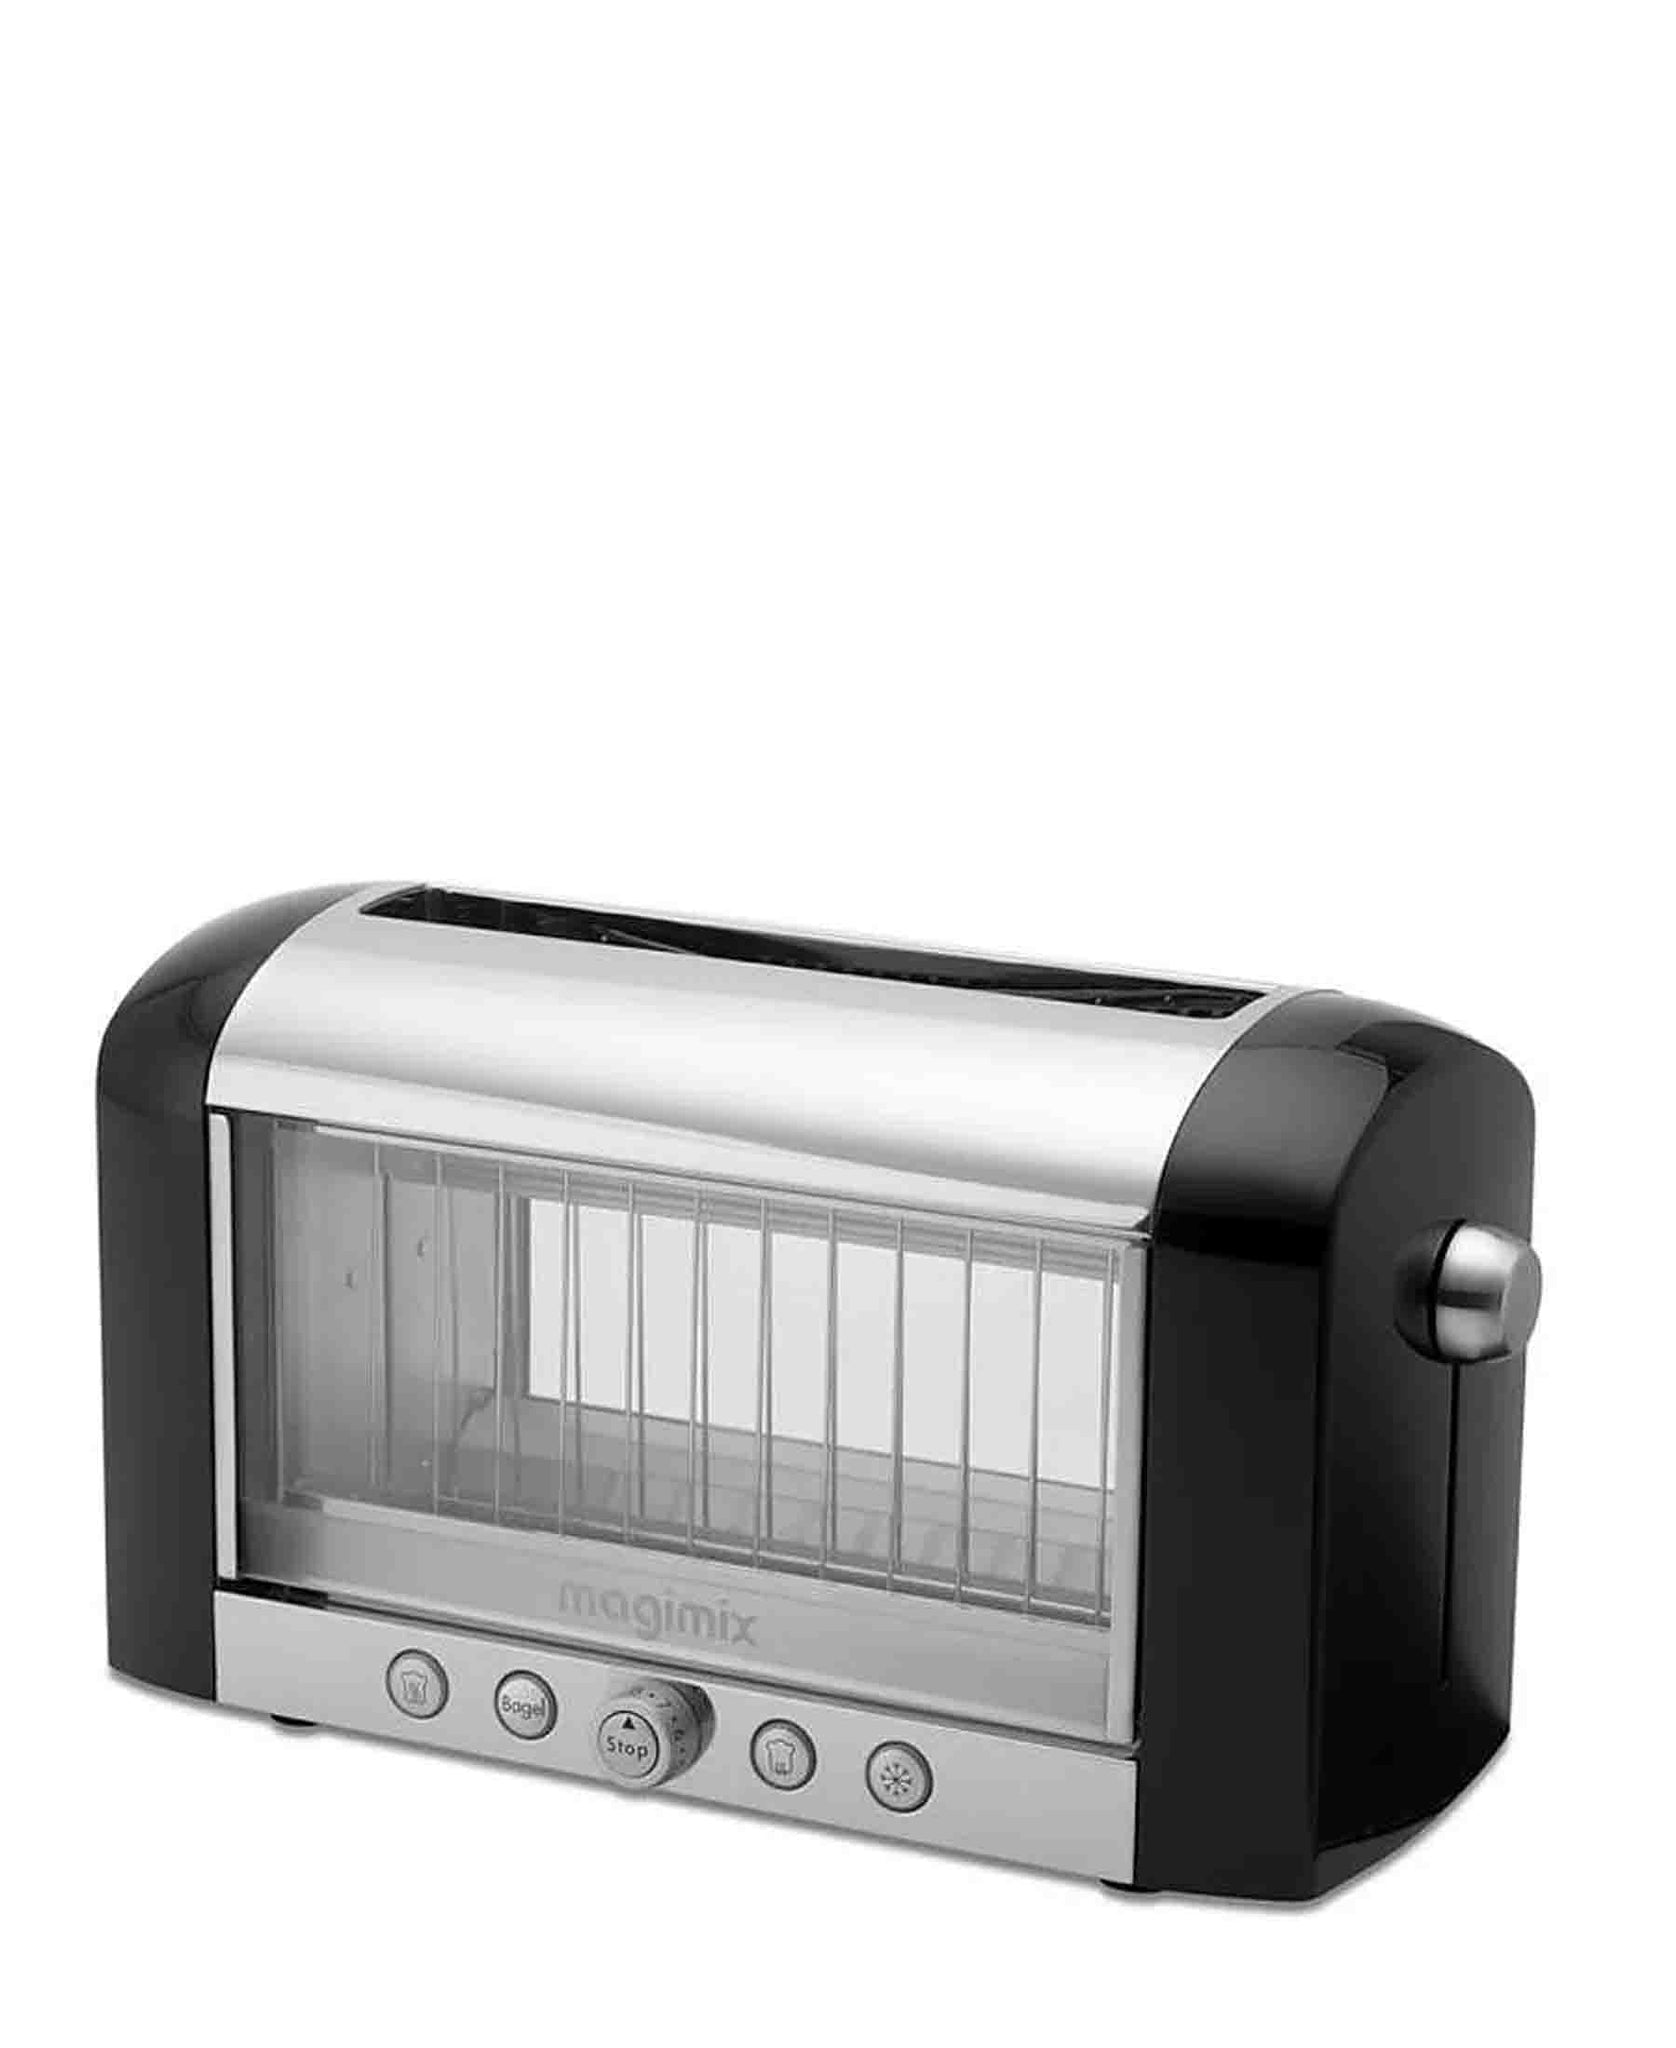 Magimix Vision 2 Slice Glass Toaster - Black